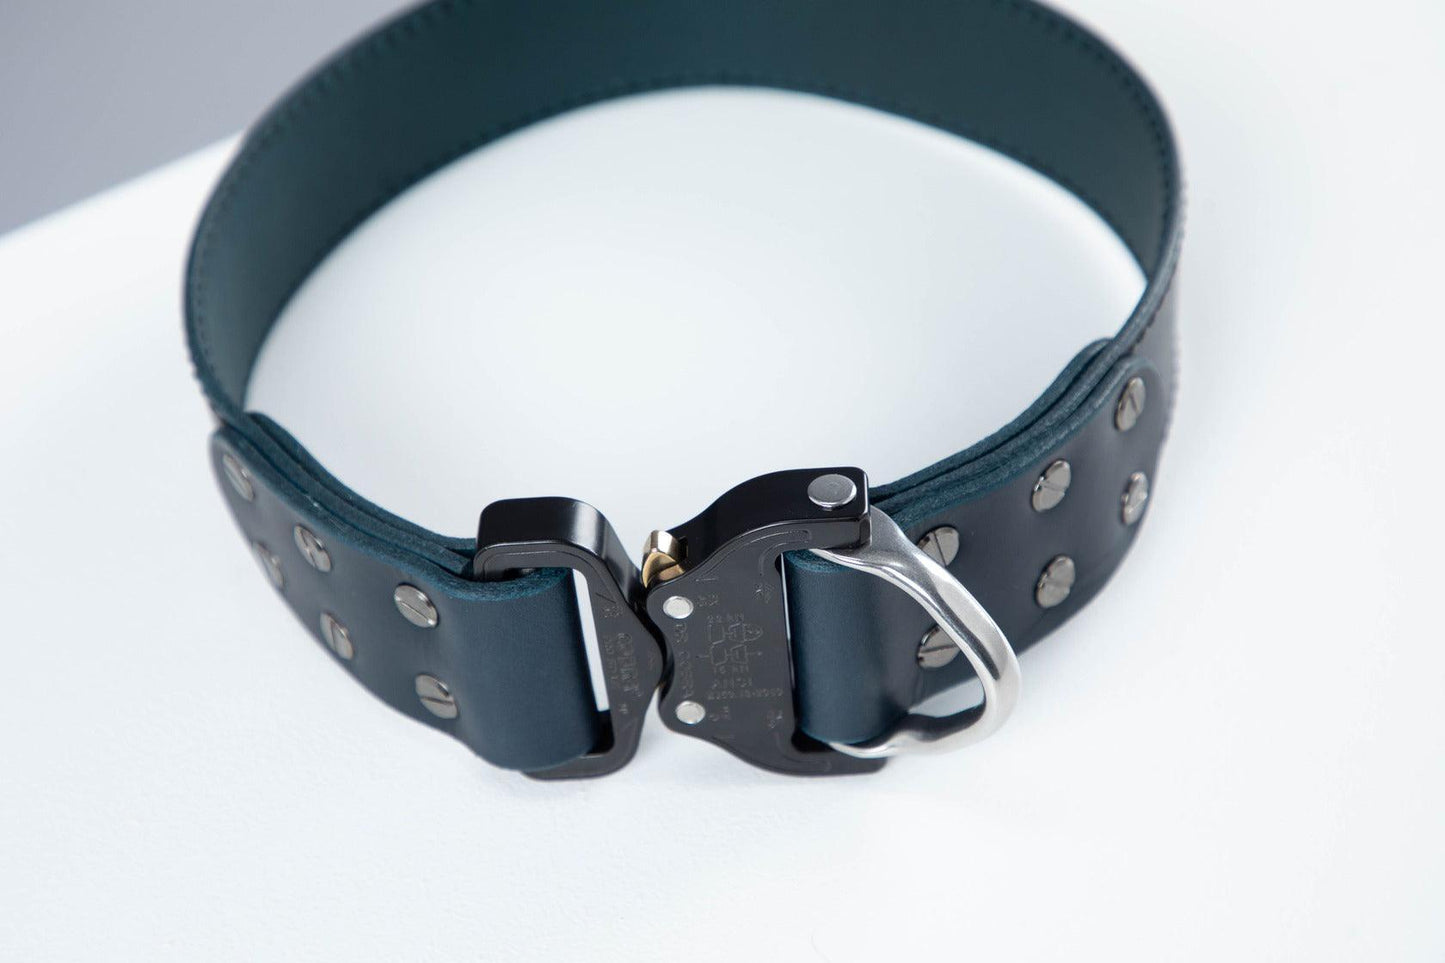 Blue leather dog collar with COBRA® buckle - premium dog goods handmade in Europe by animalistus